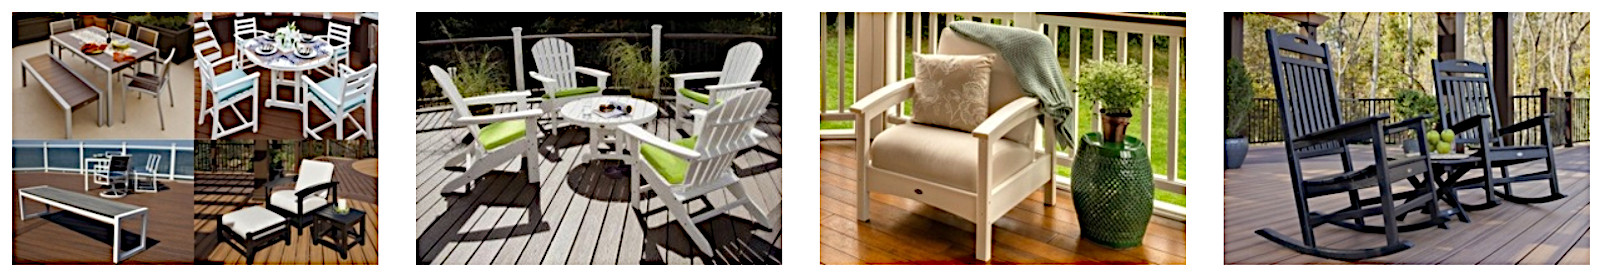 Trex outdoor furniture closeout price